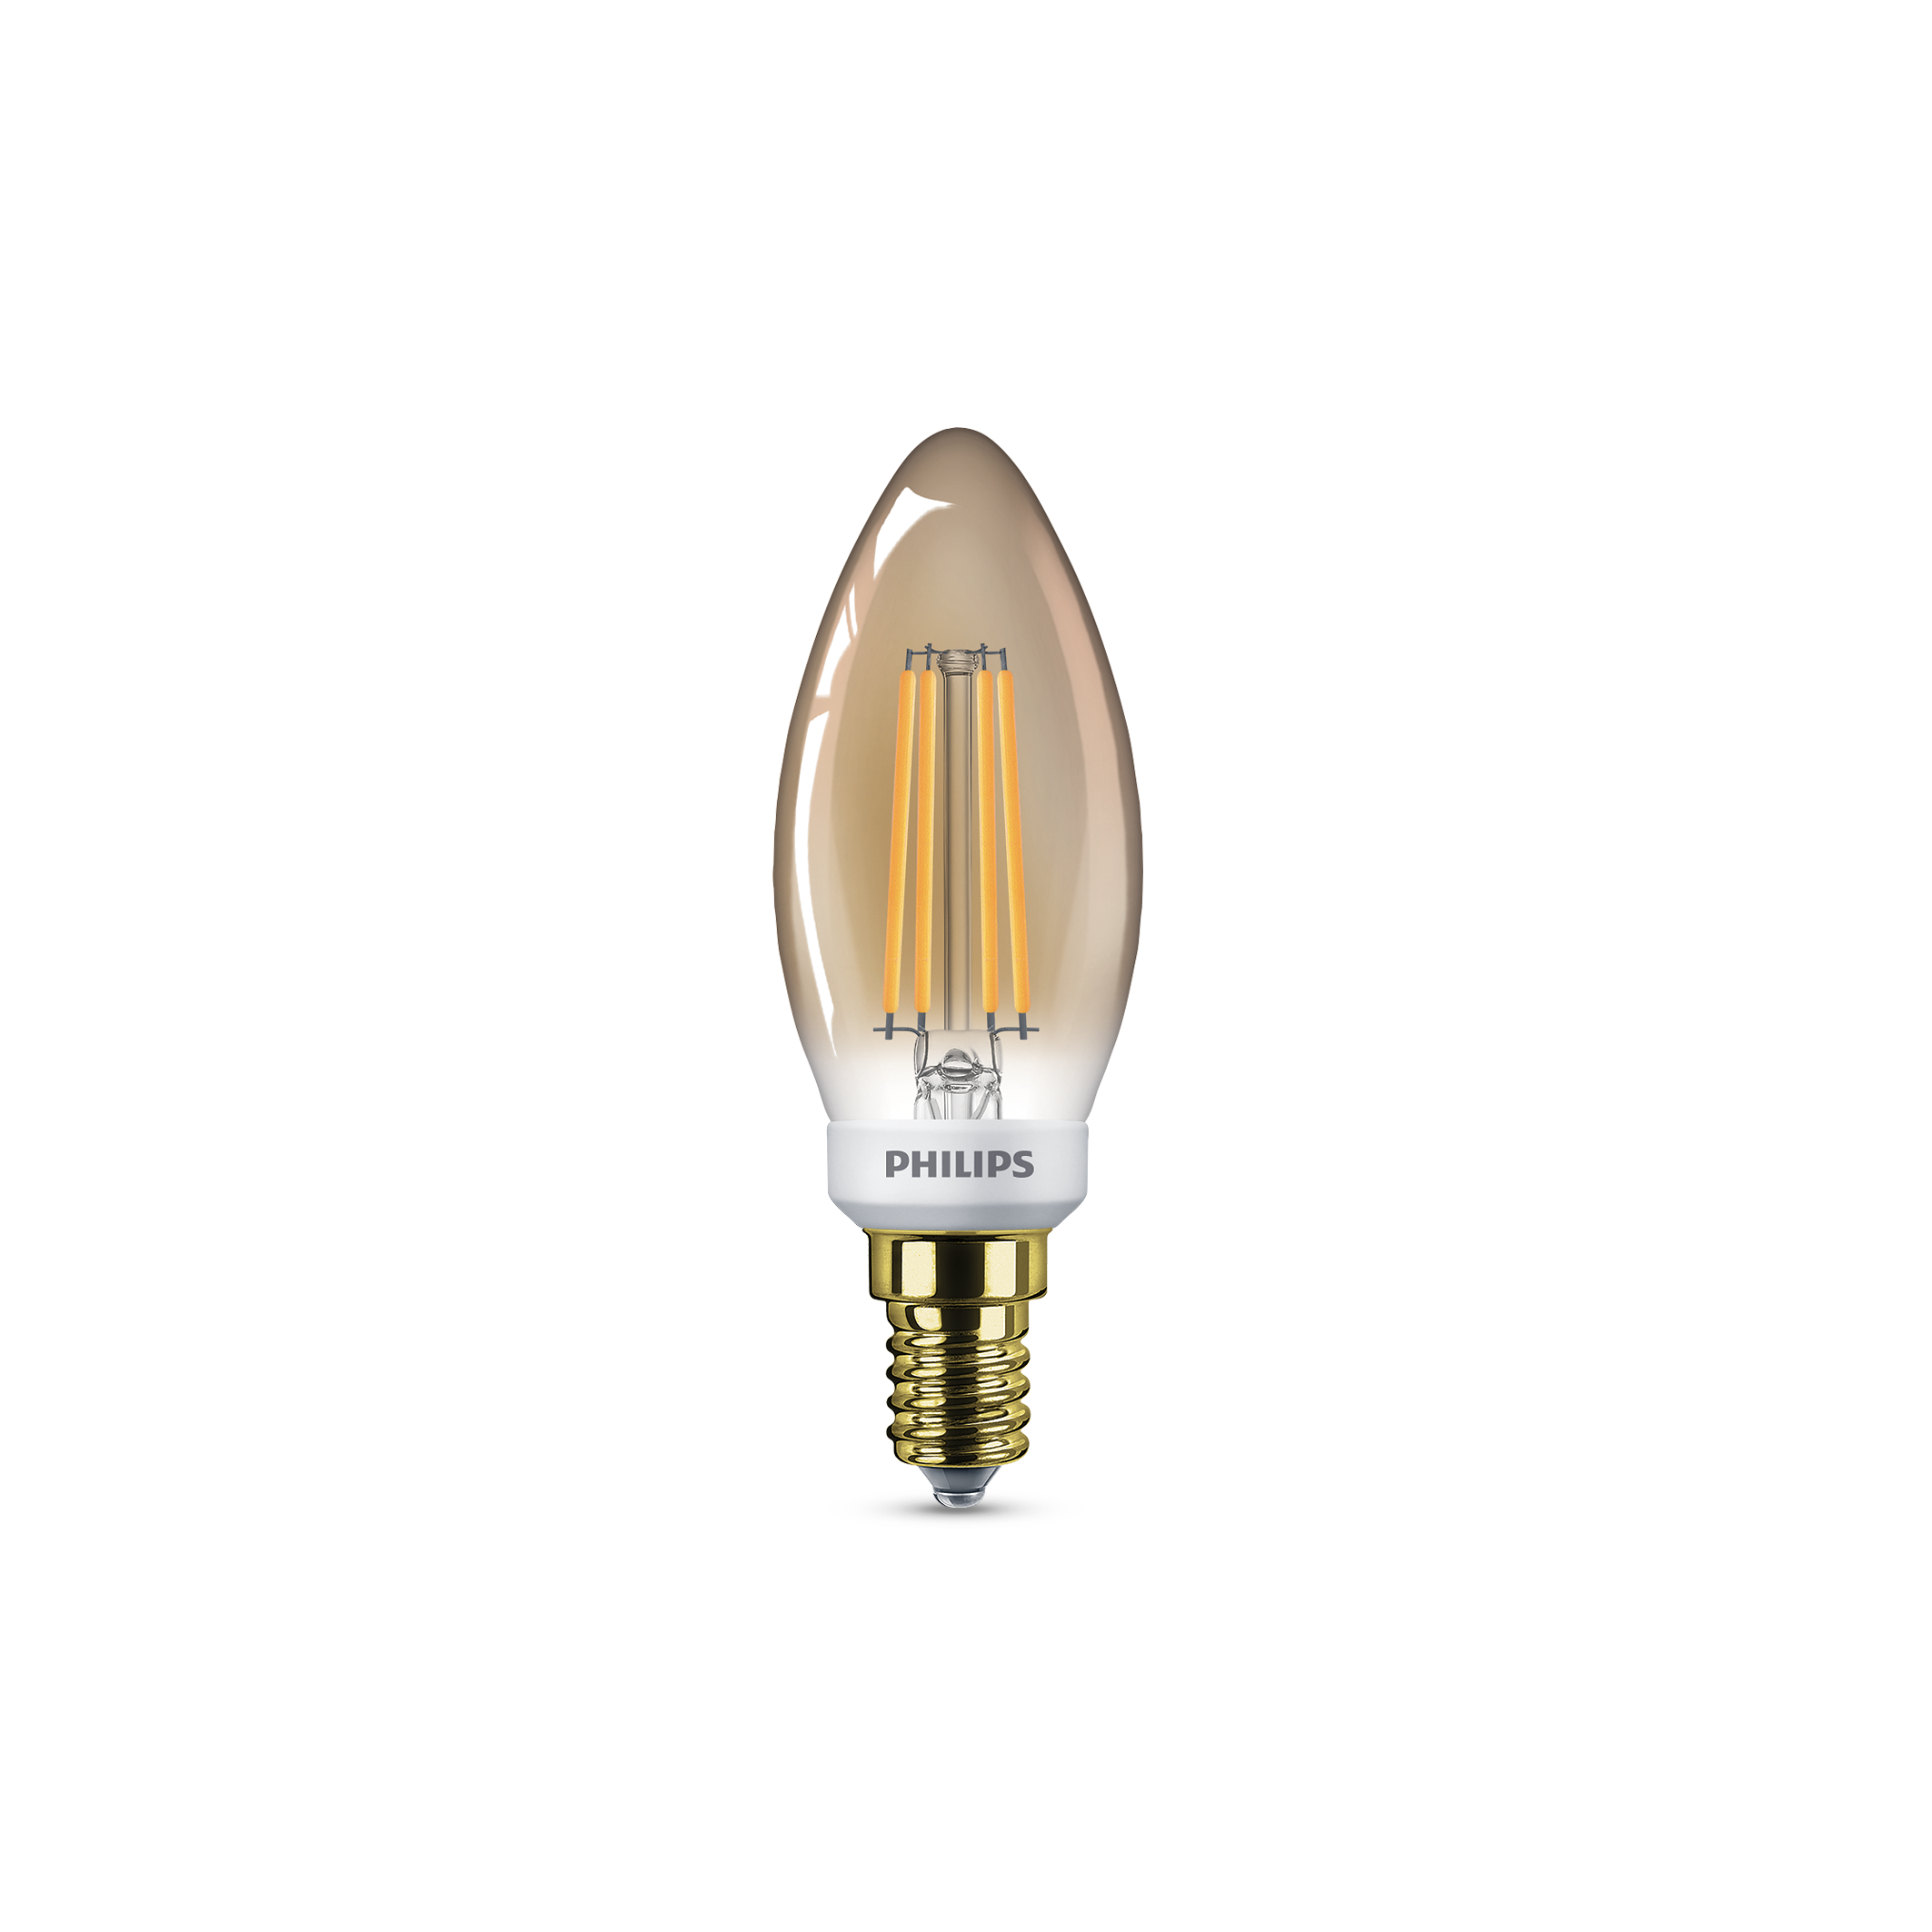 Dekorative Master Value LED-Lampen in Kerzen- und Tropfenform